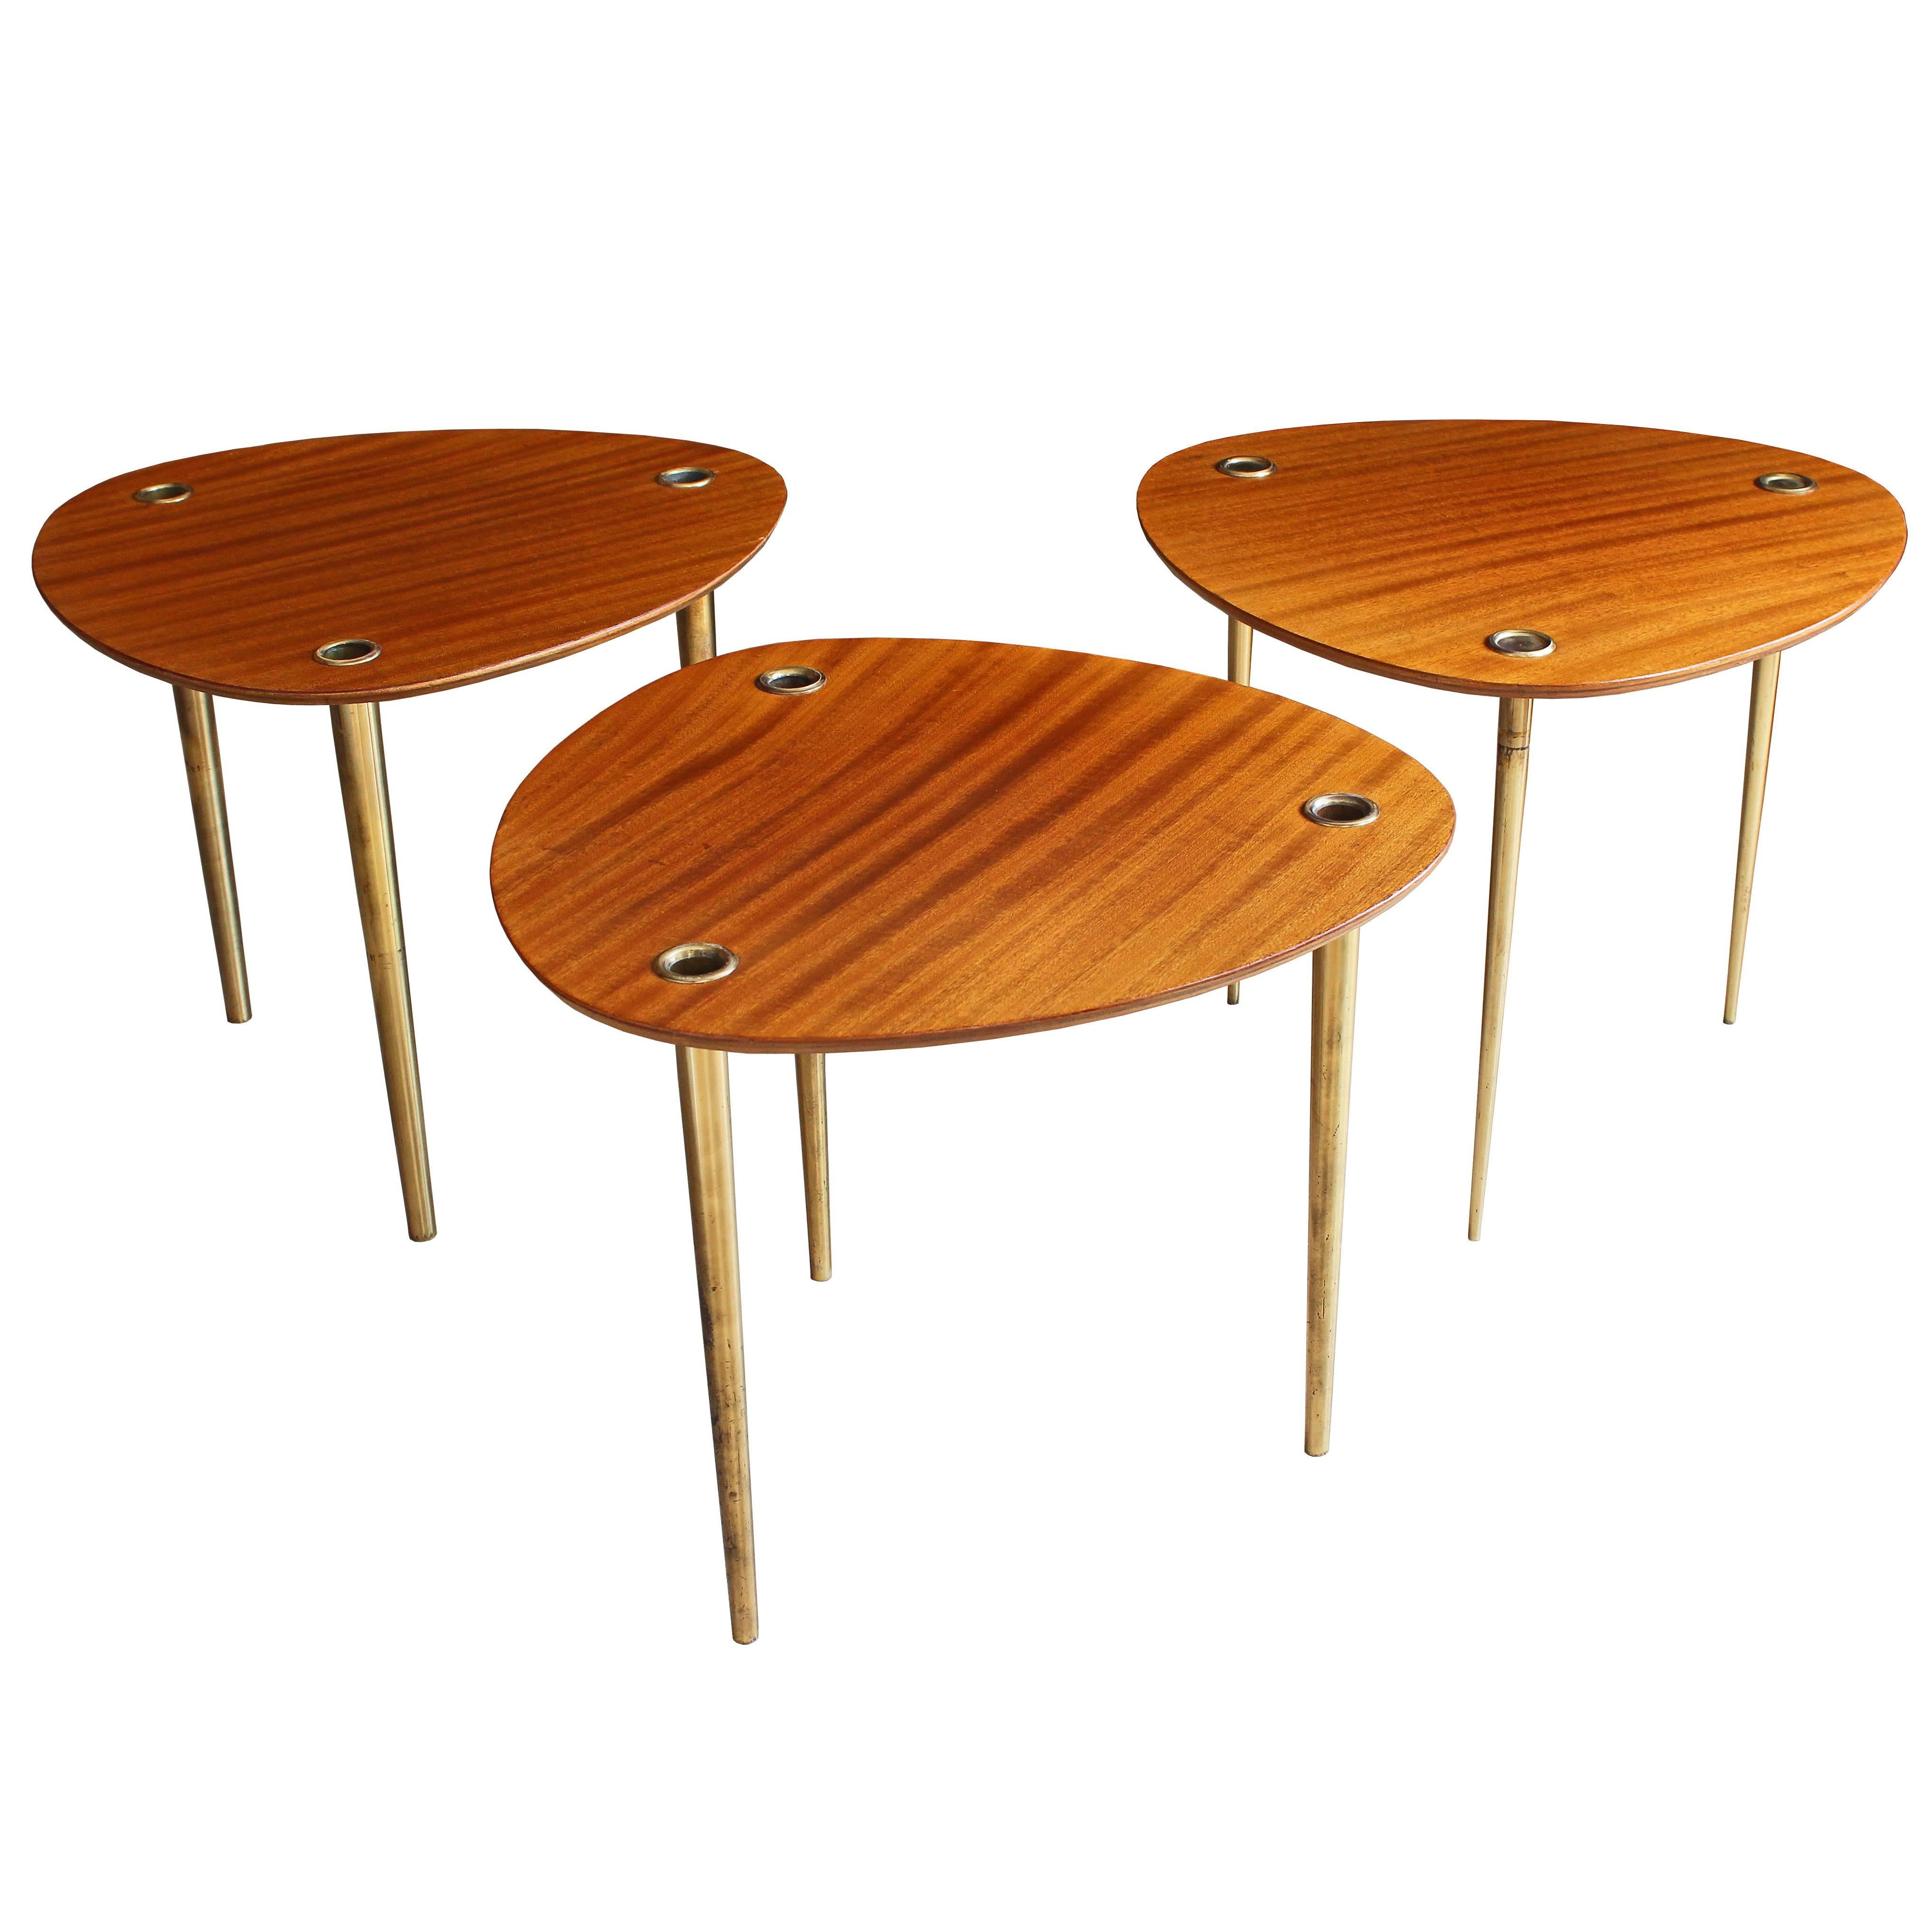 Set of Three Tables